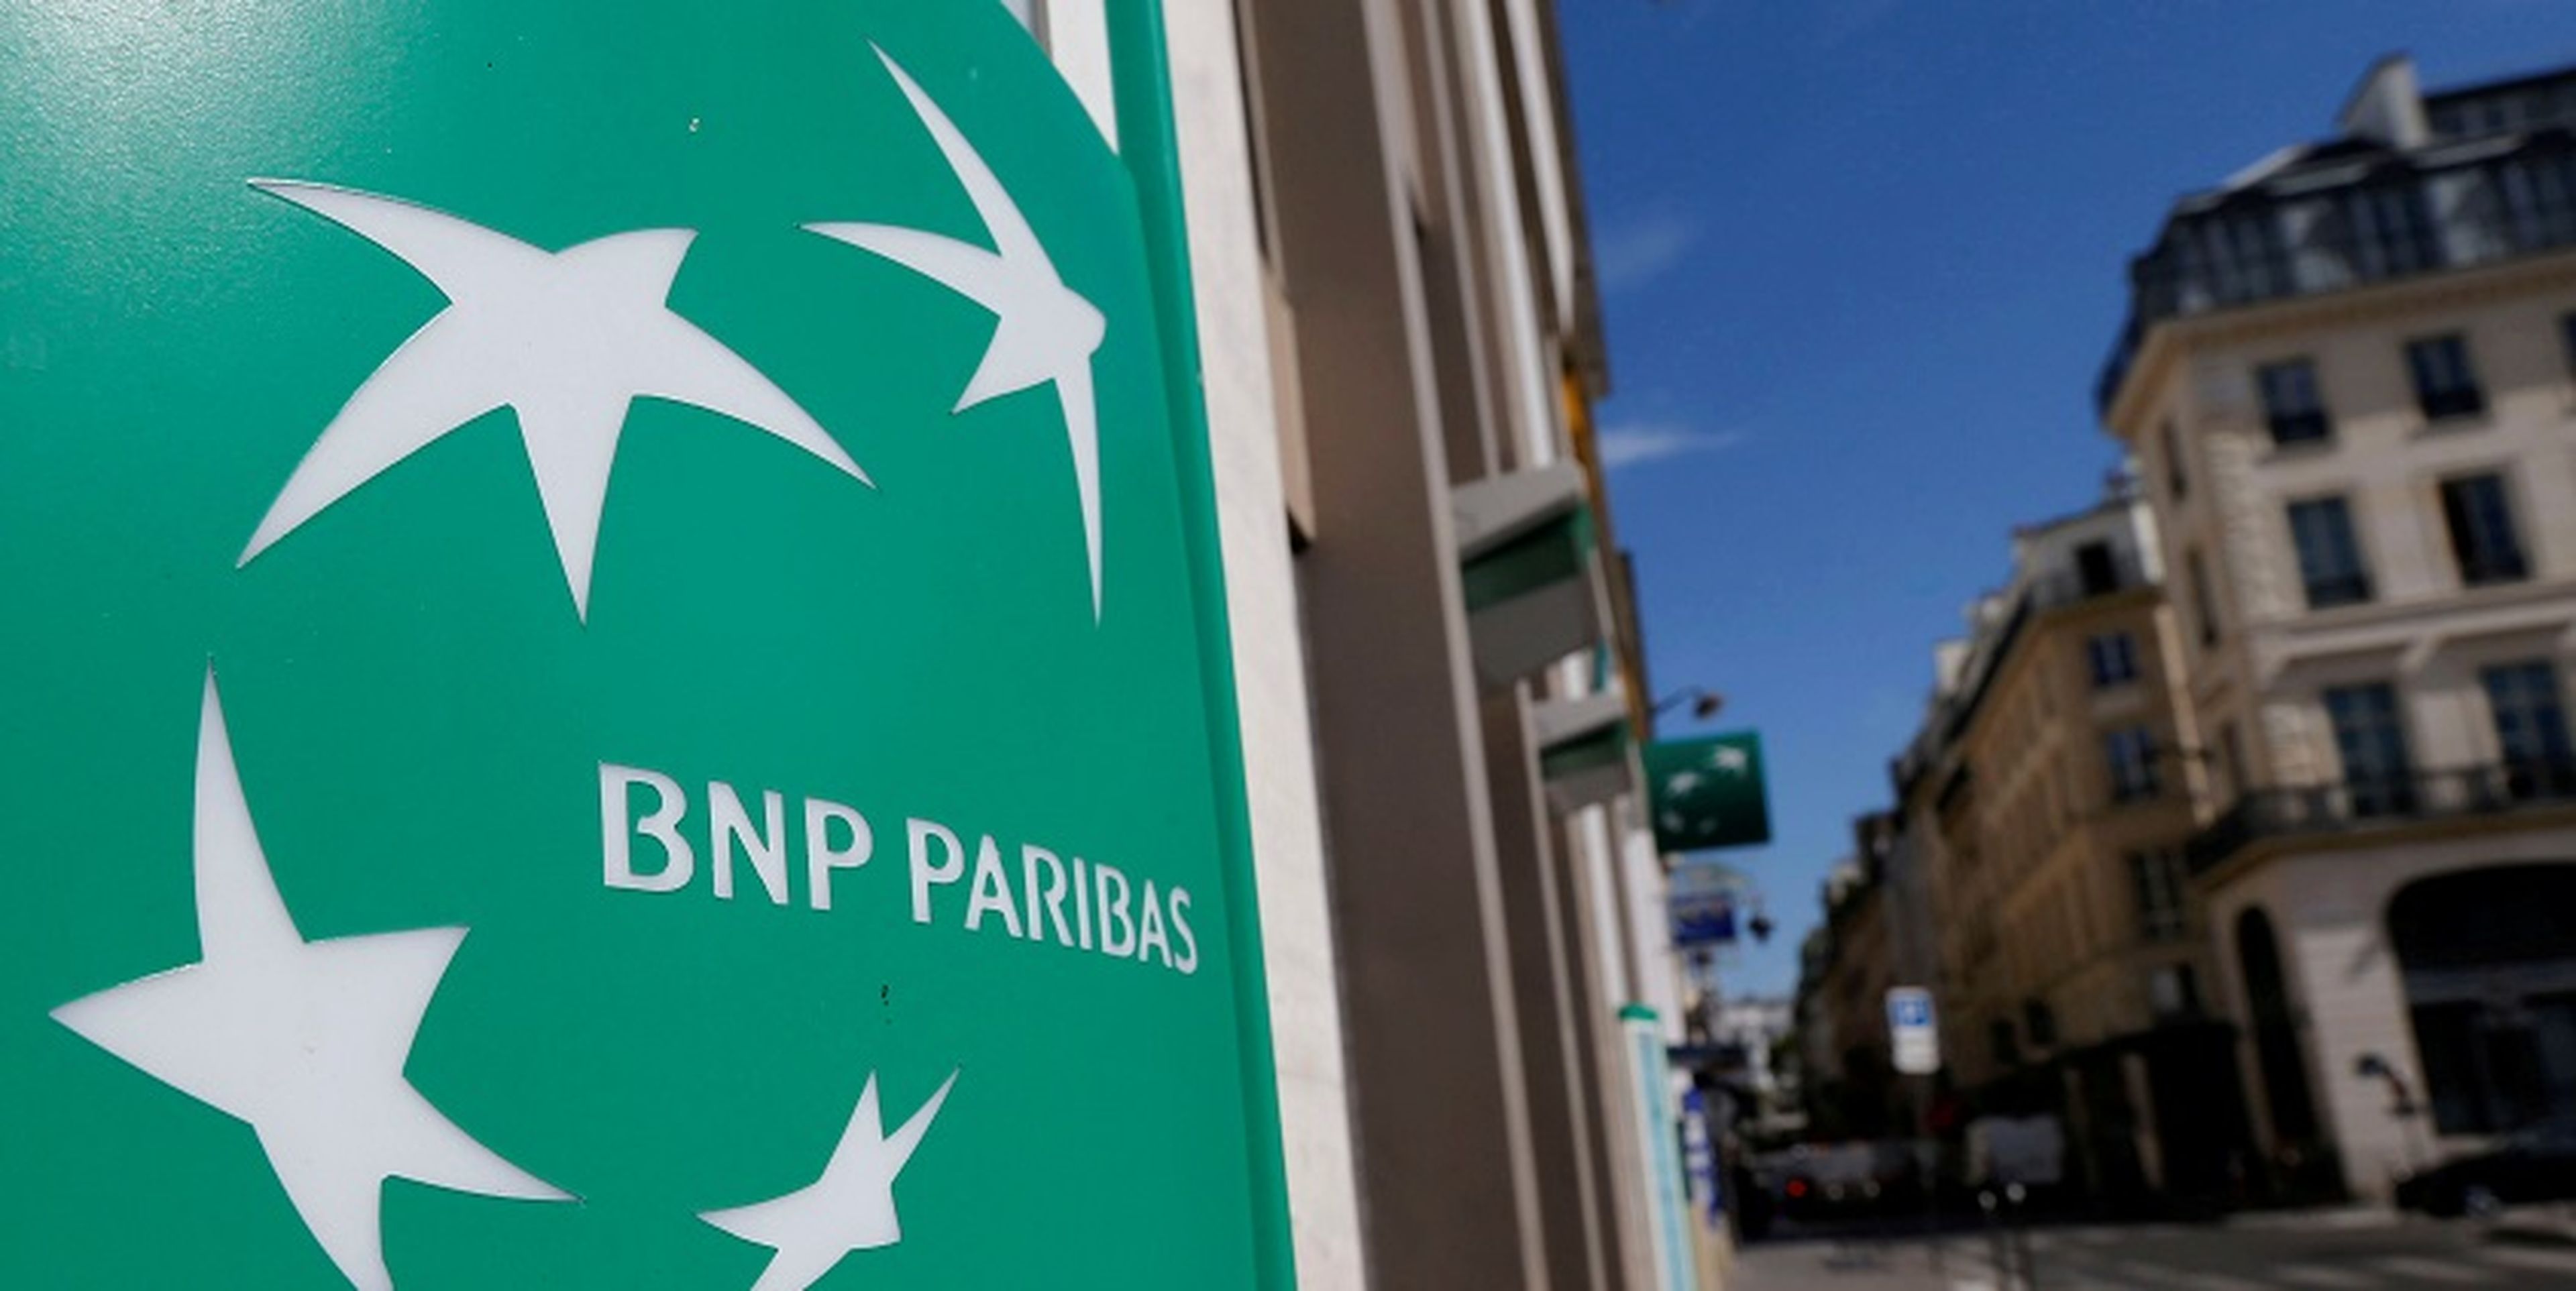 Renta 4 compra BNP Paribas en España